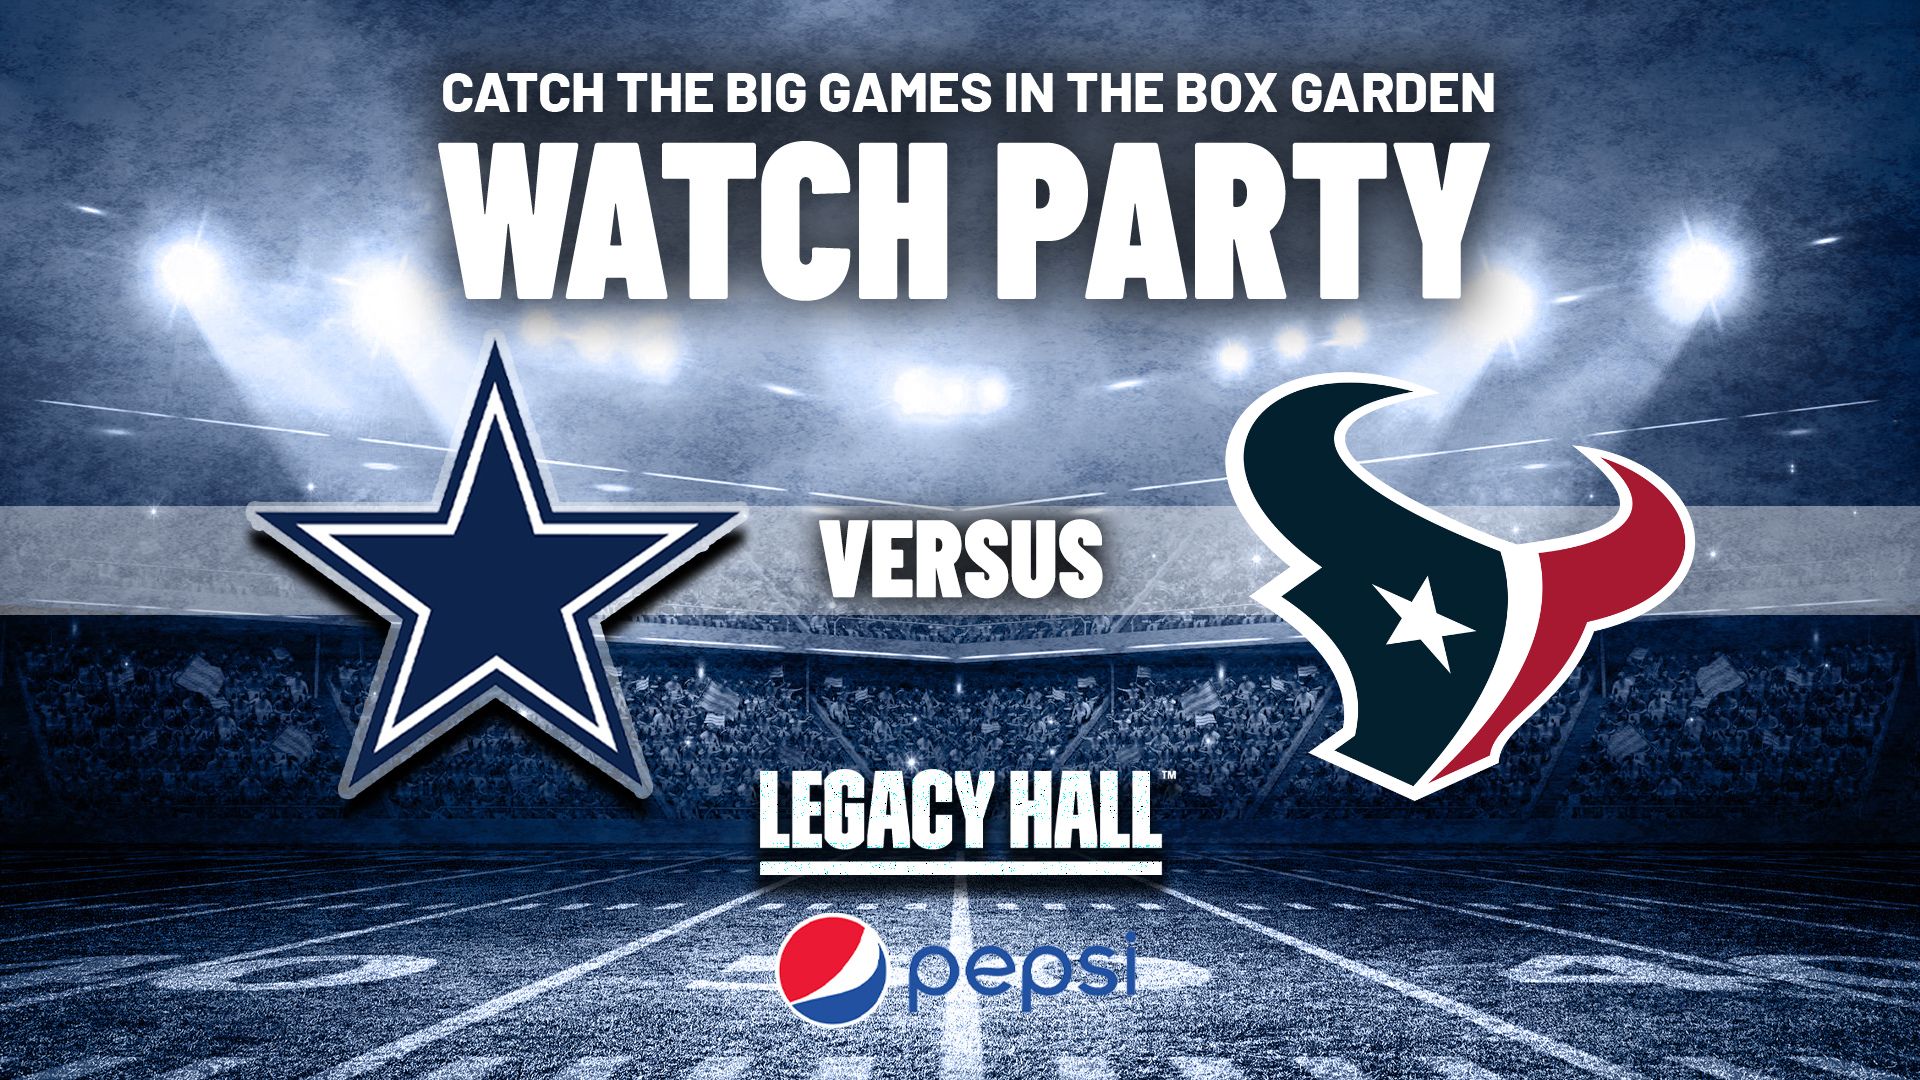 Cowboys vs. Texans Watch Party - hero